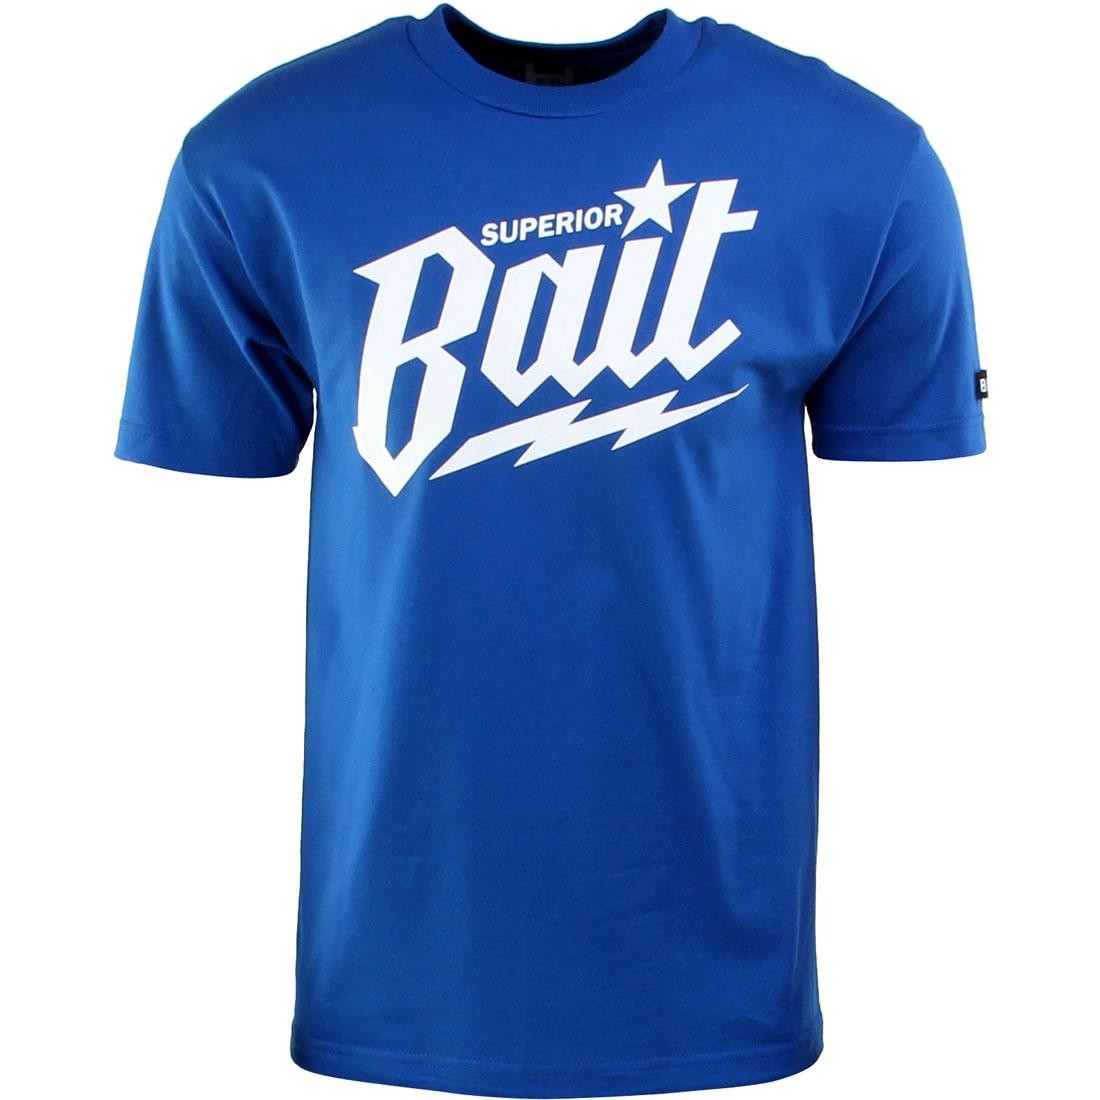 BAIT Superior BAIT Tee (blue / royal blue / white)